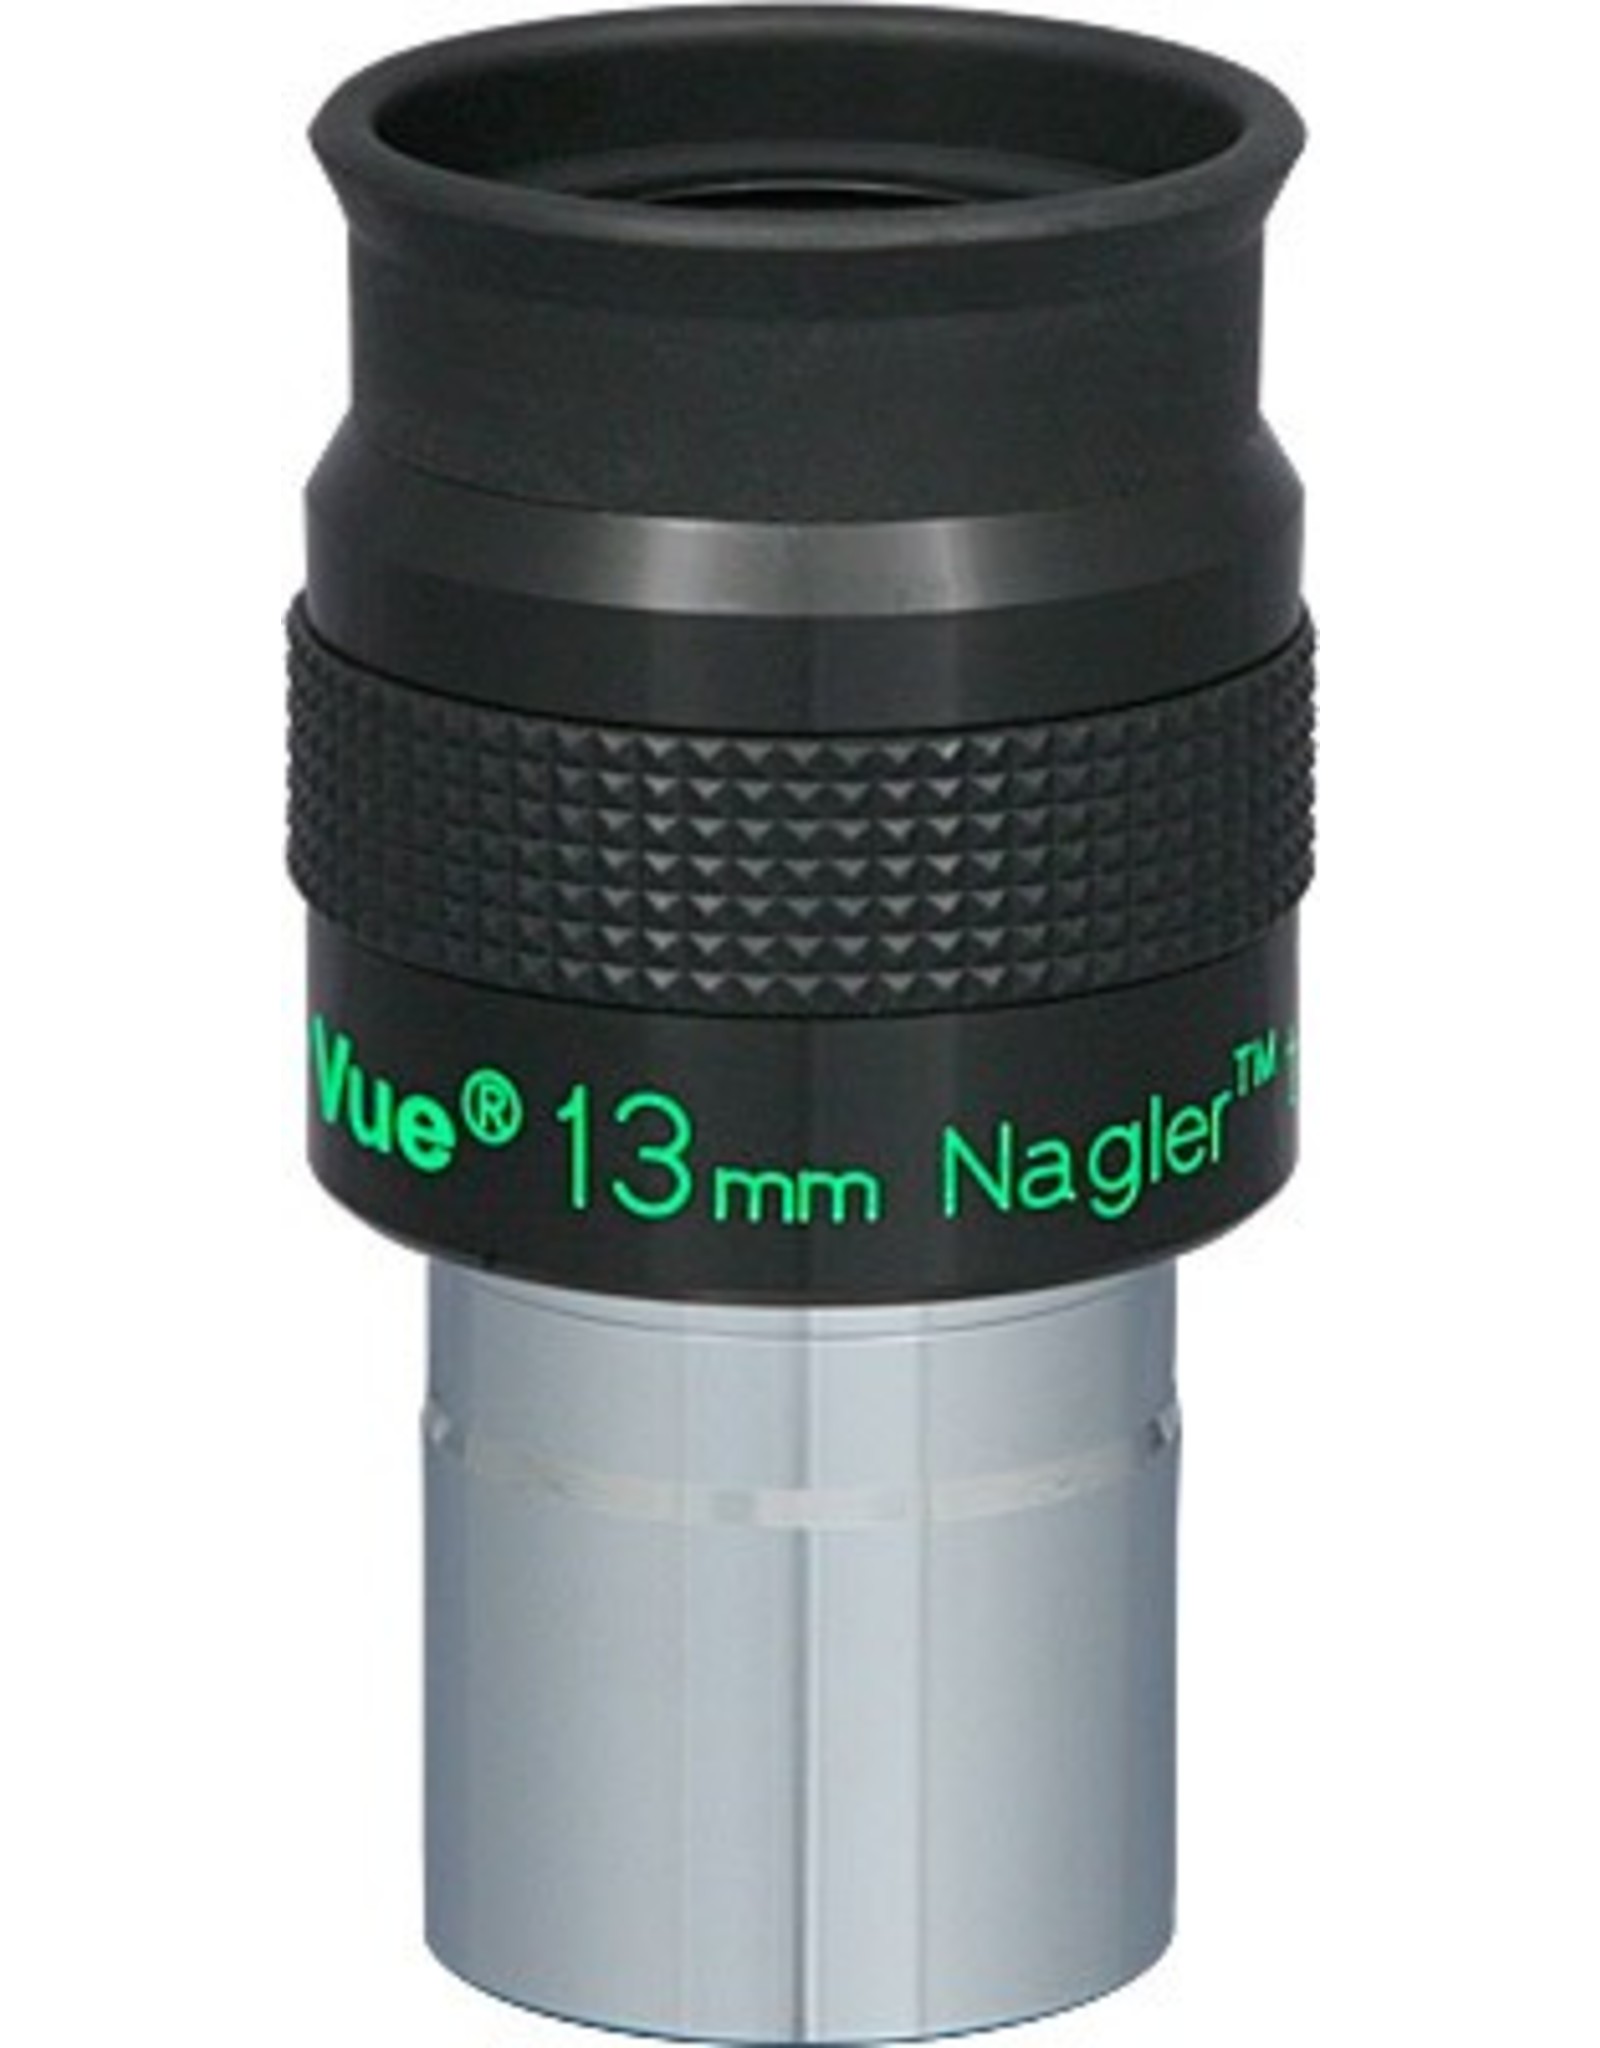 Televue 13mm Nagler Type 6 Eyepiece - 1.25"